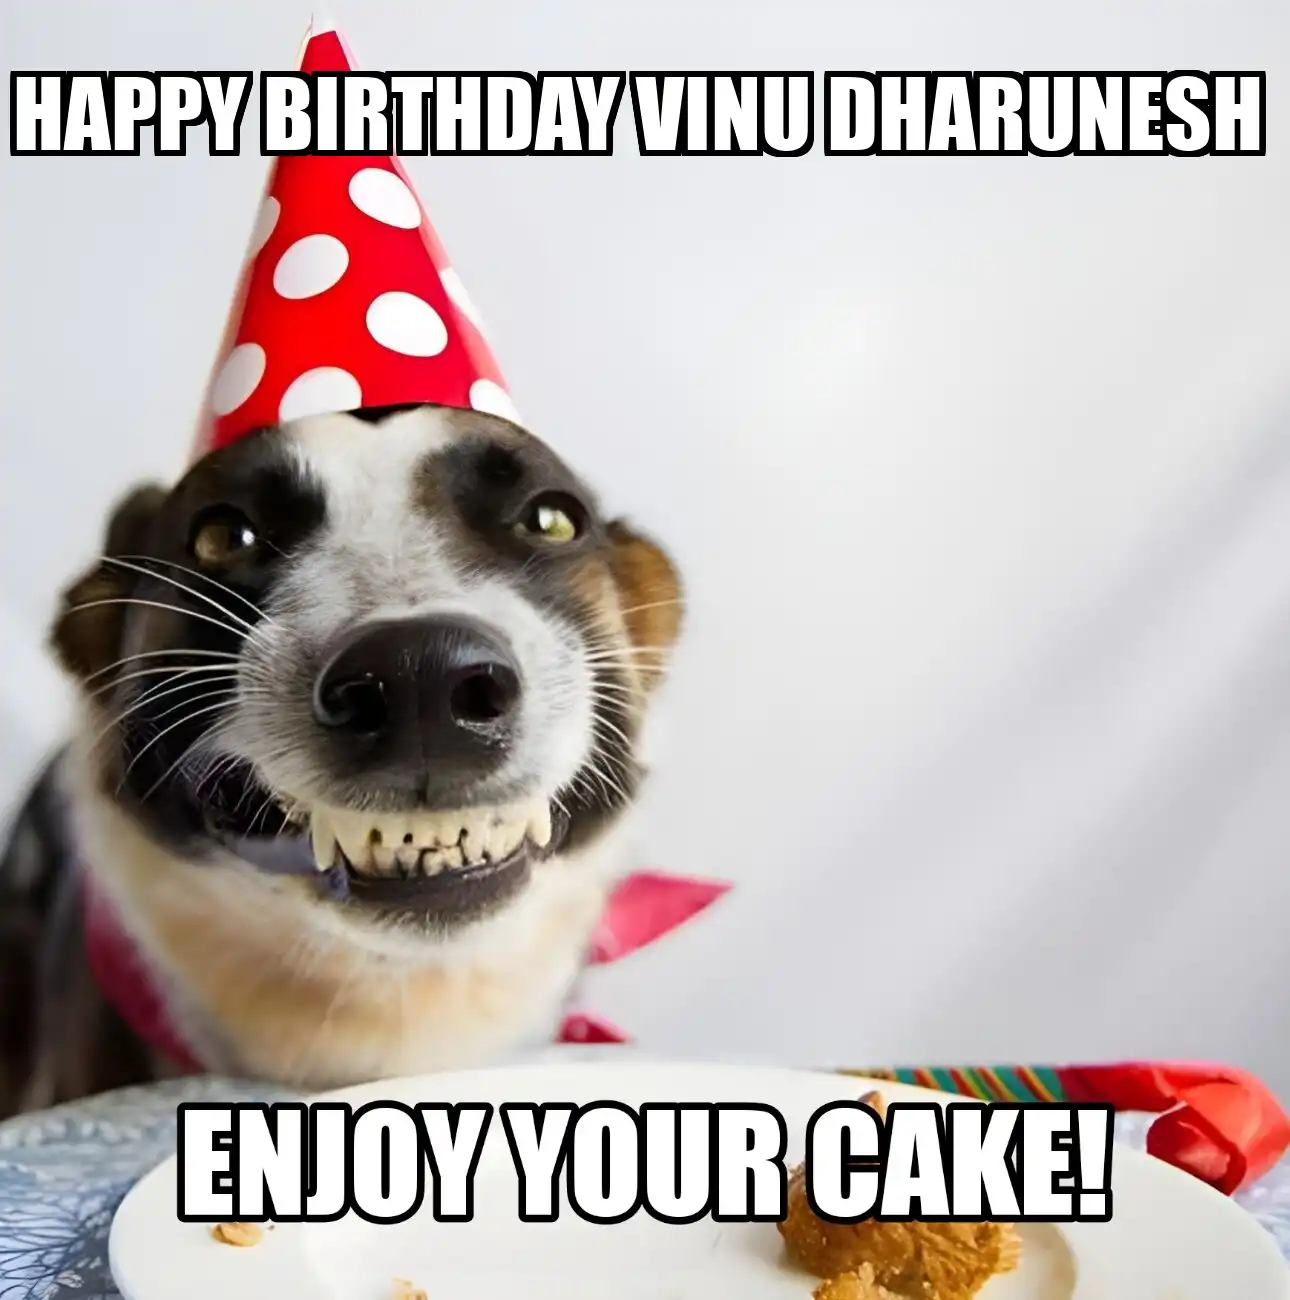 Happy Birthday Vinu dharunesh Enjoy Your Cake Dog Meme